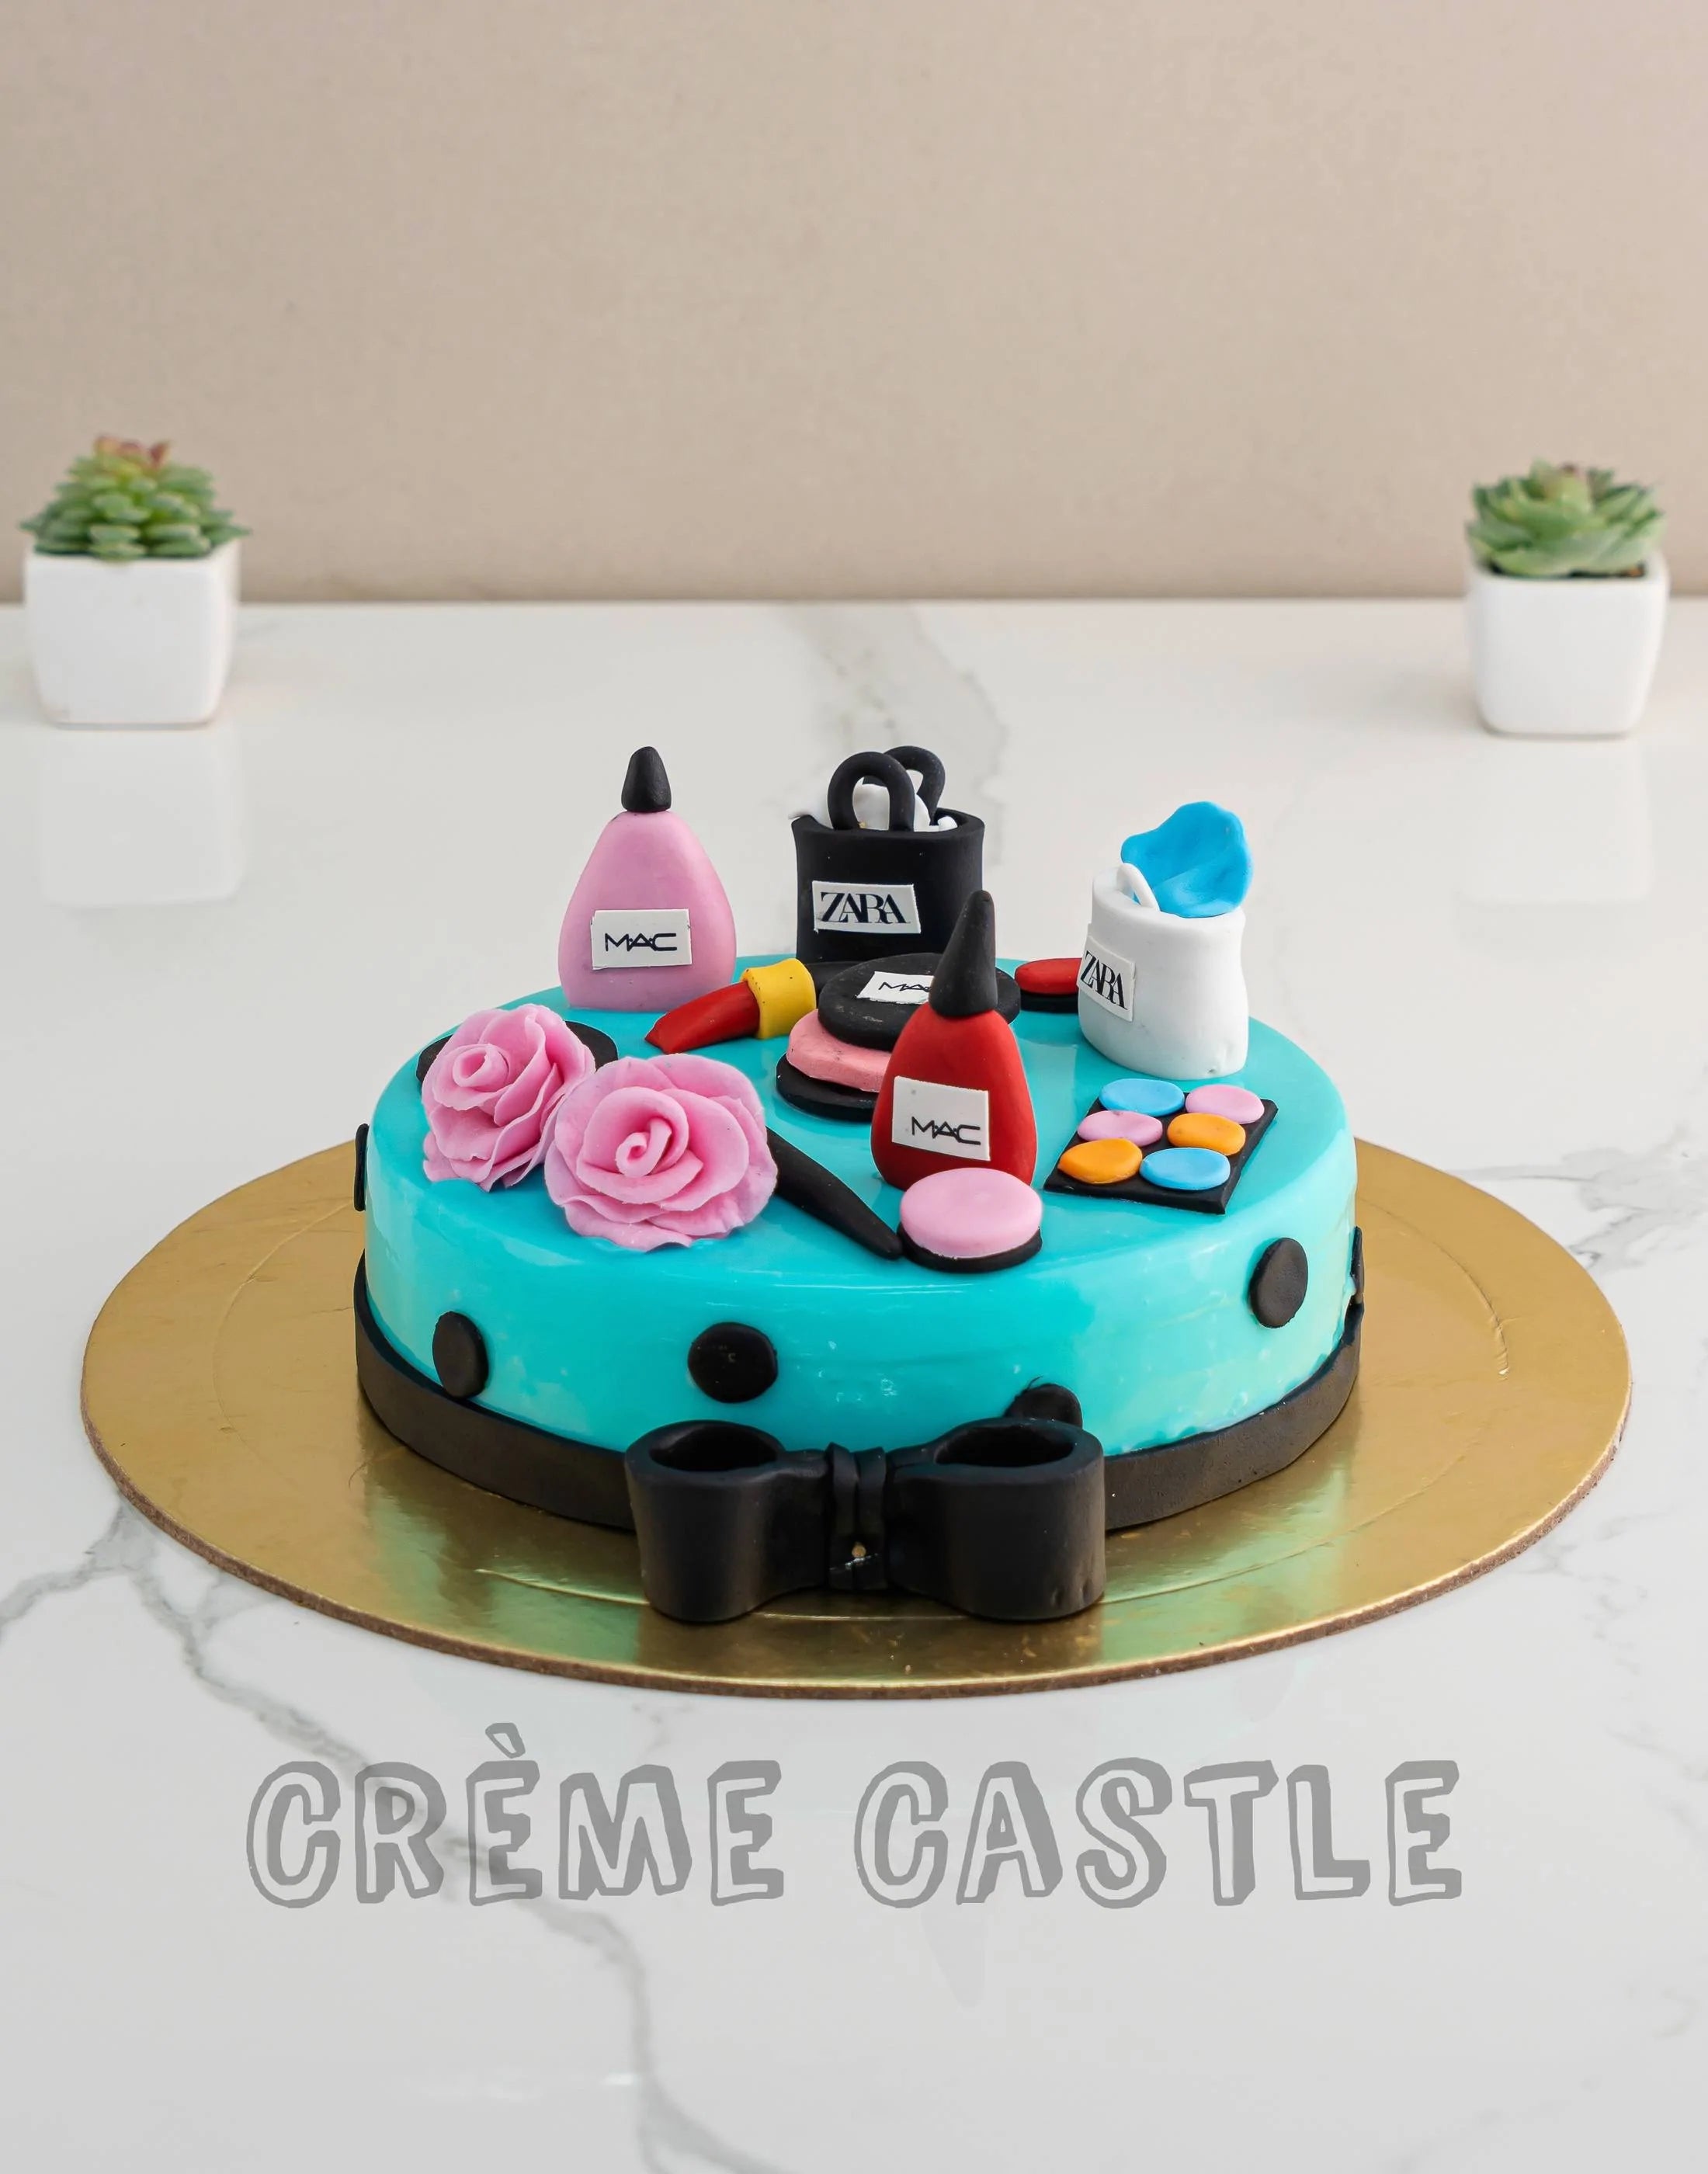 Happy Birthday Cake for Wife | Buy Romantic Birthday Cake